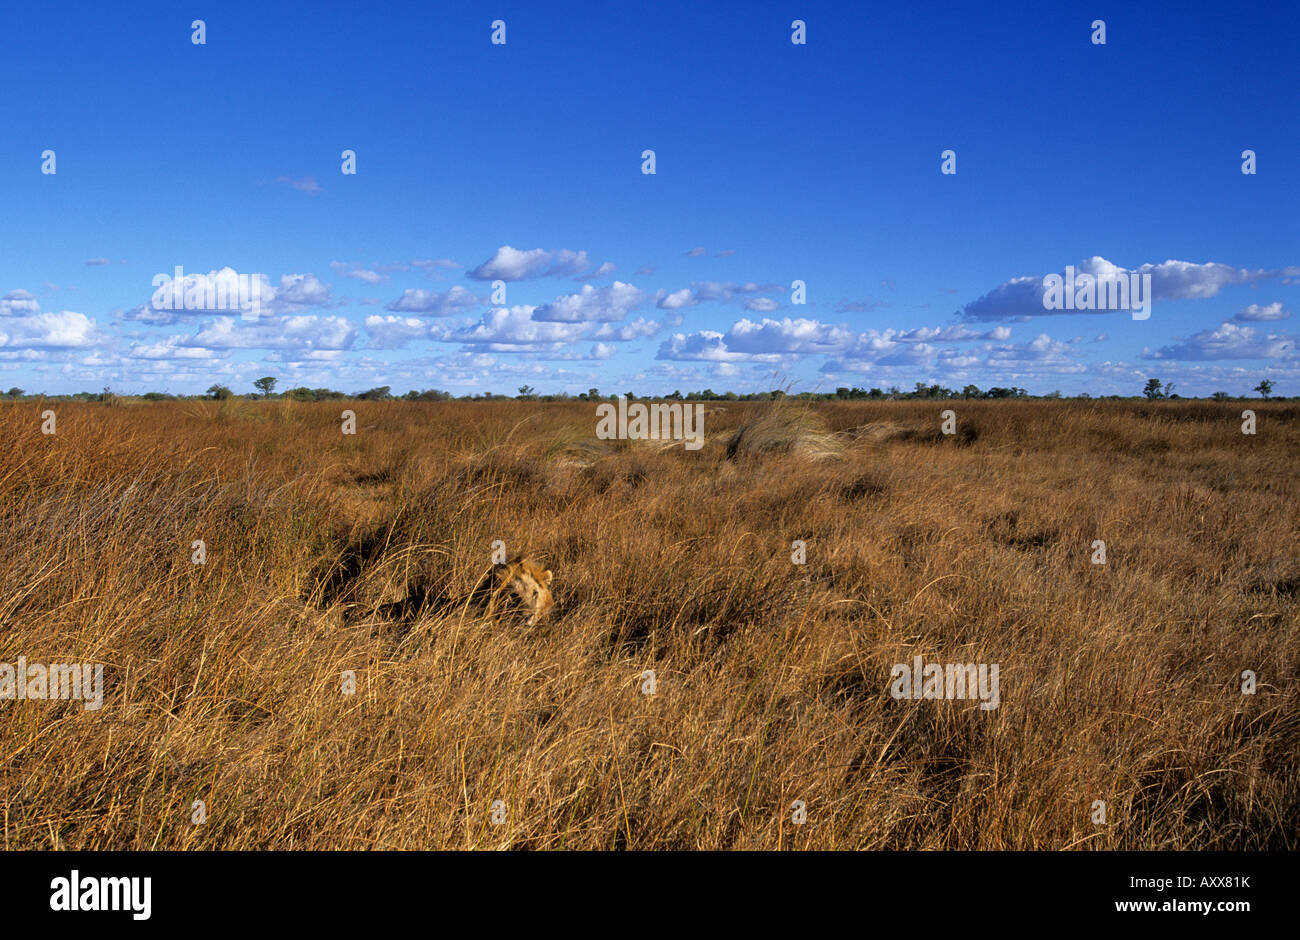 Lion (Panthera leo), Savuti, Chobe National Park, Botswana Banque D'Images